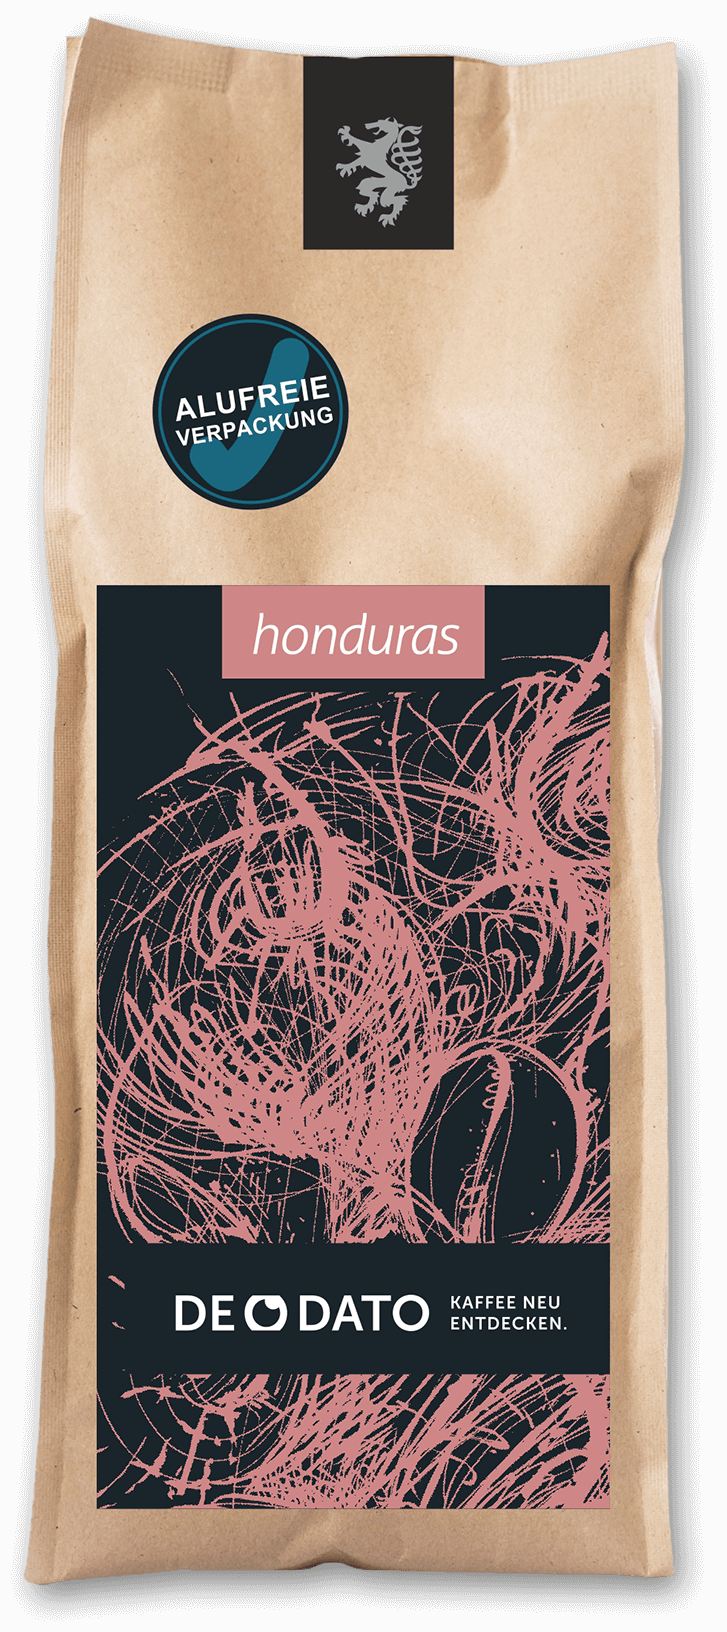 DEODATO Honduras gemahlen - 250 g